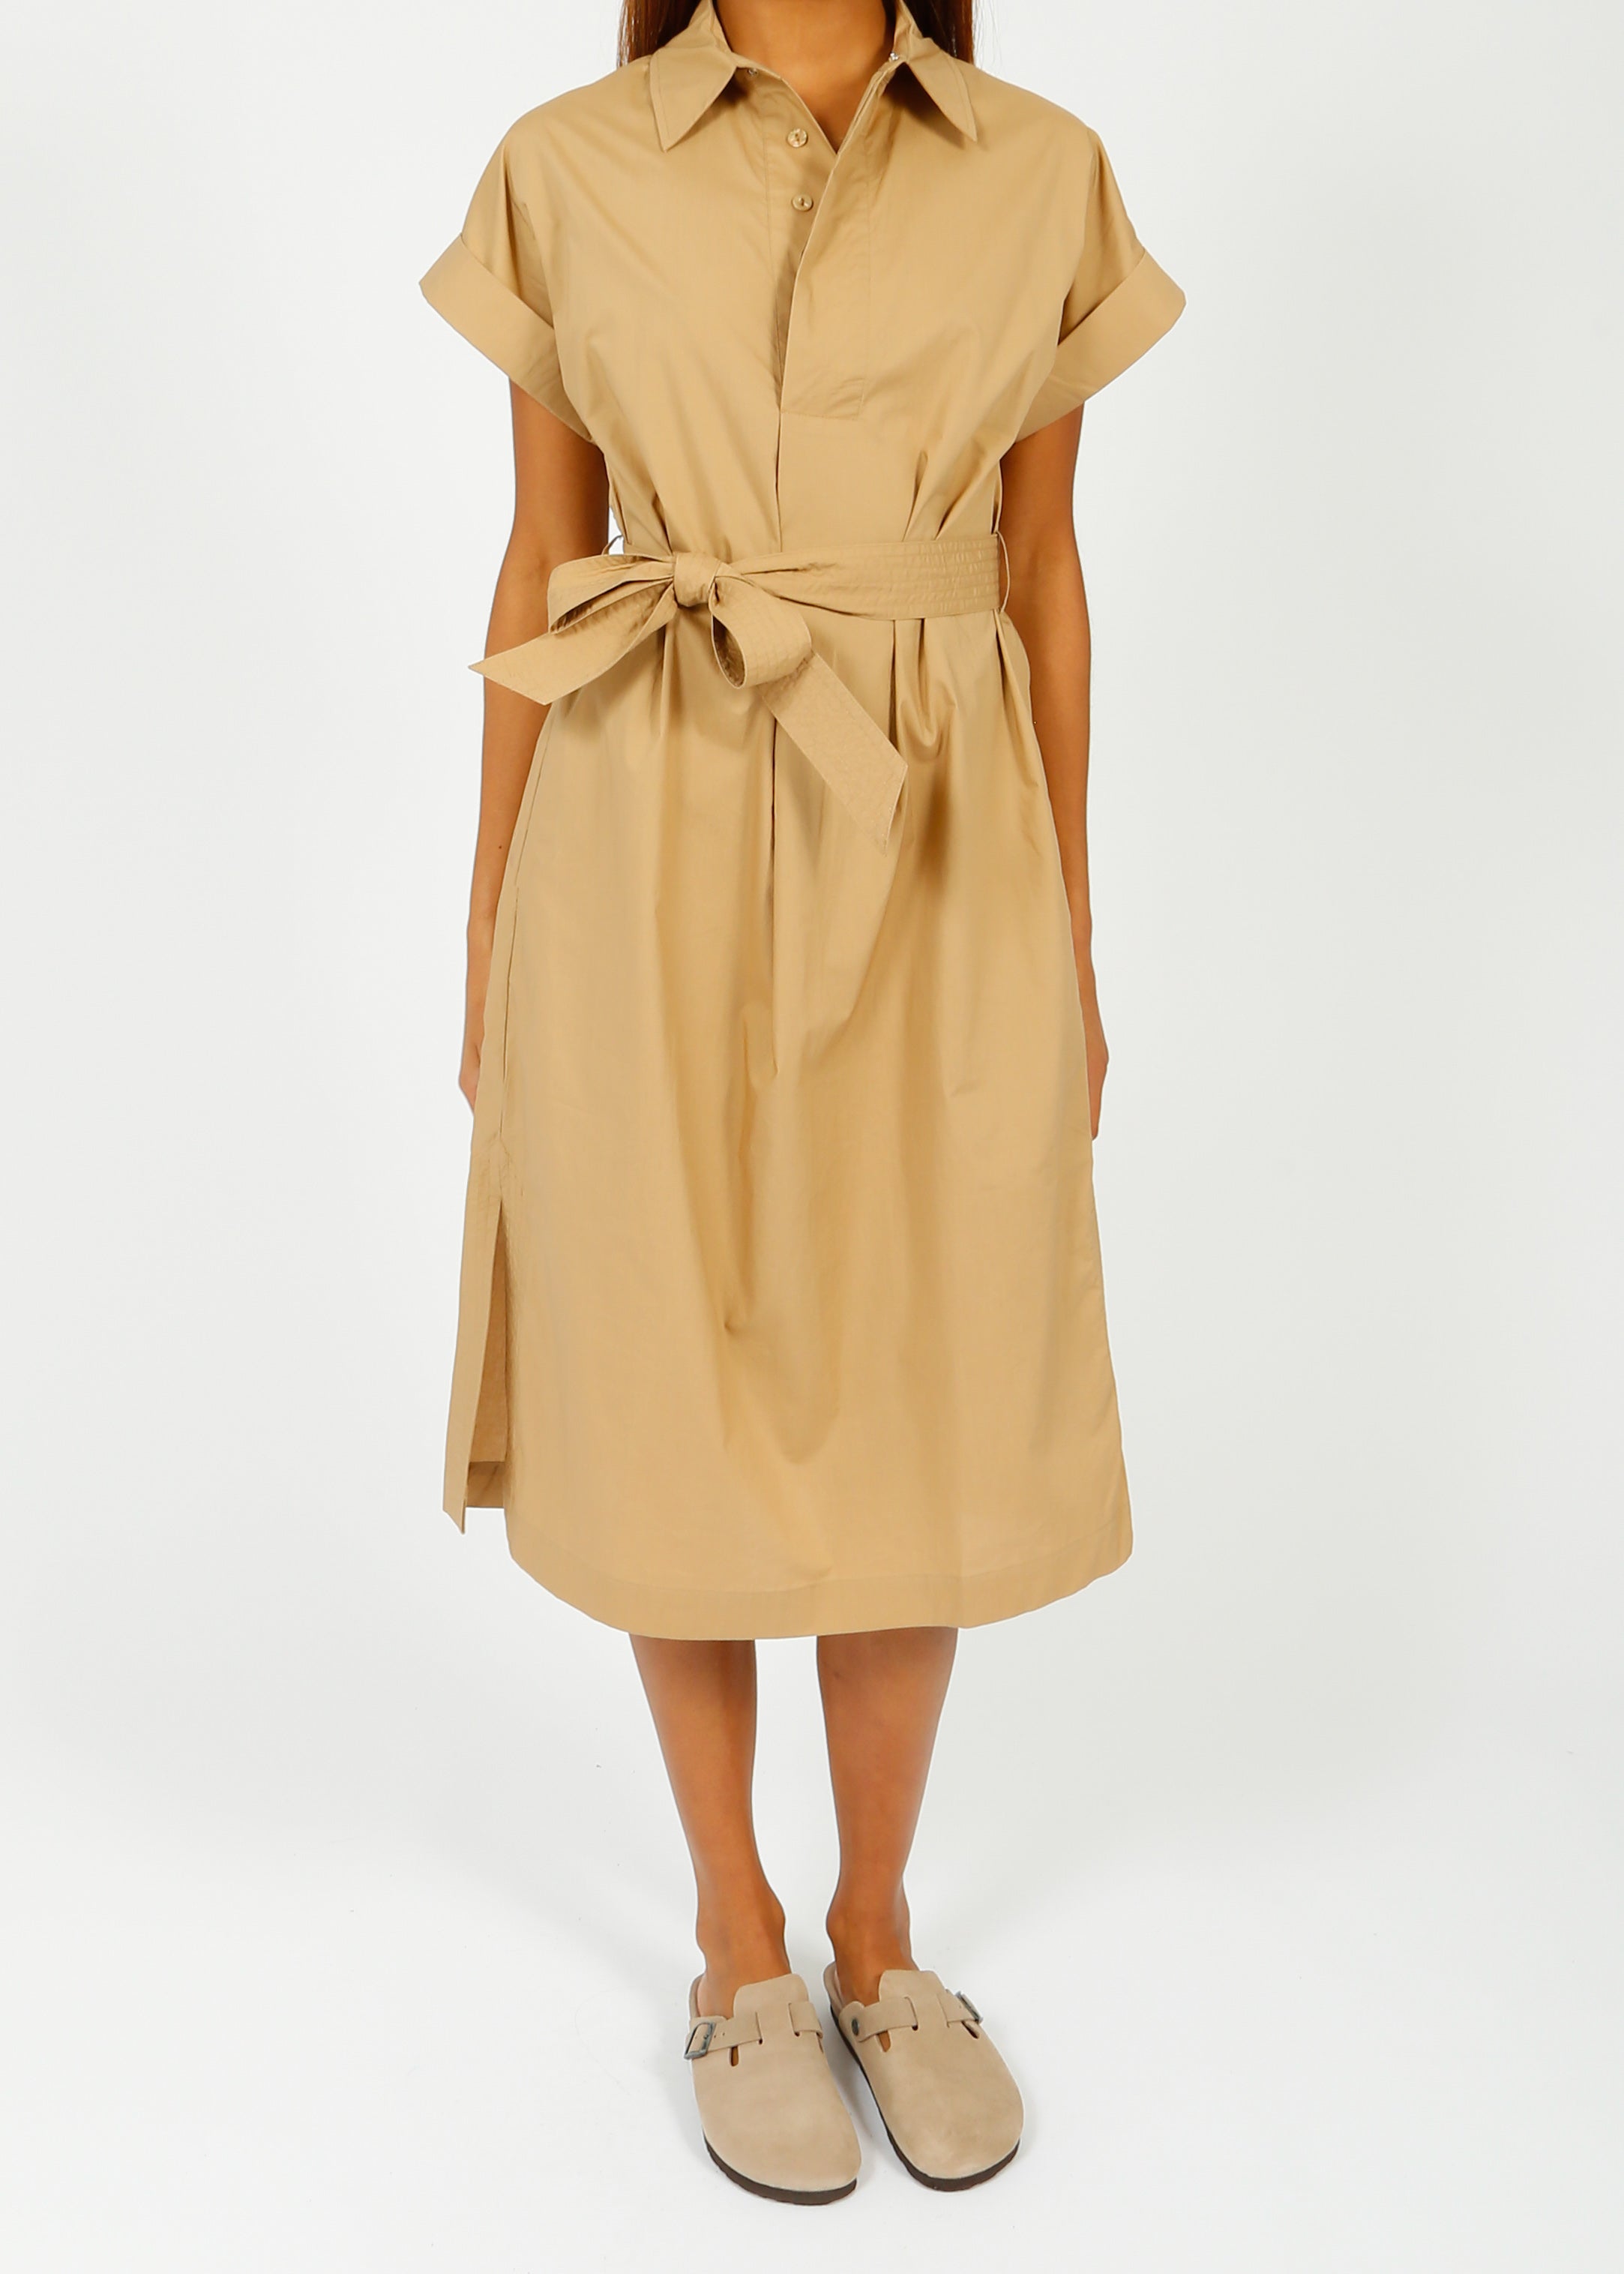 SUNCOO Clodie Dress in Camel